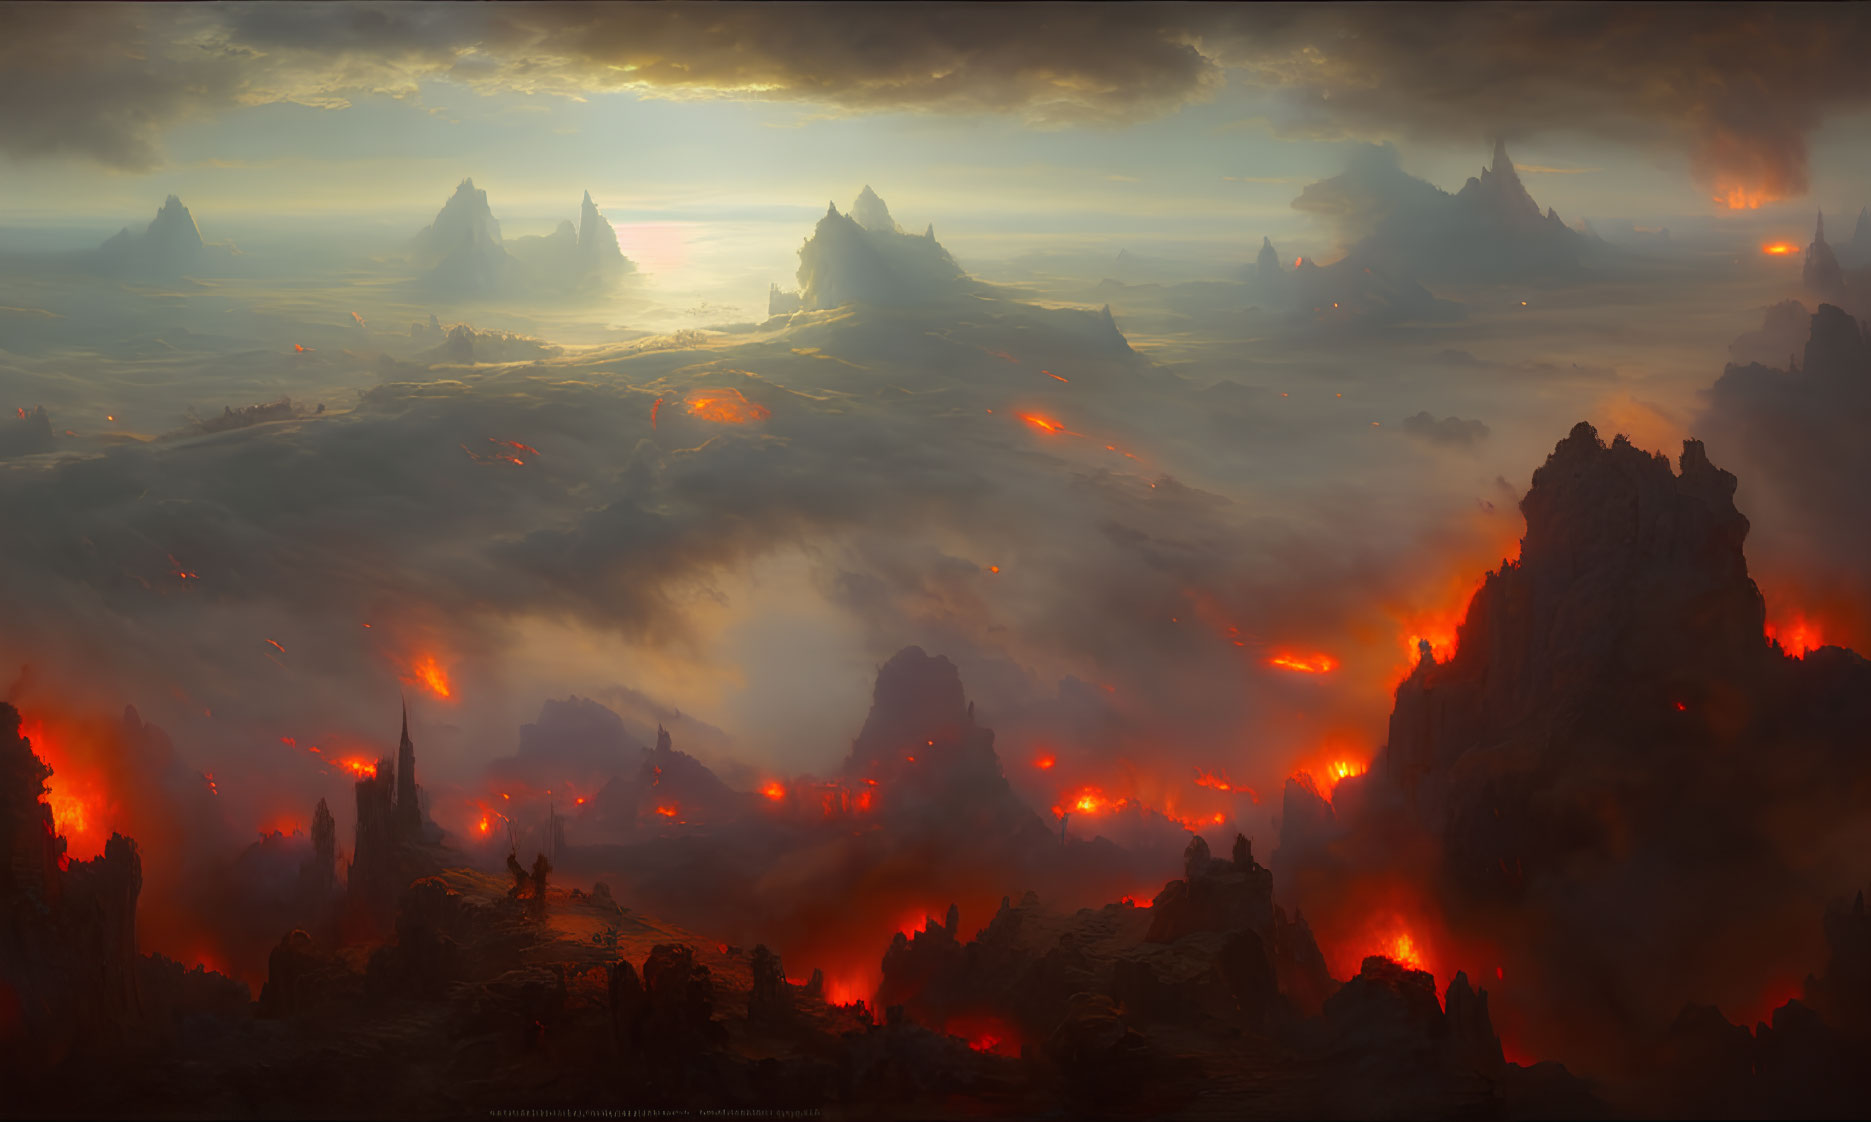 Expansive volcanic landscape under fiery sunset